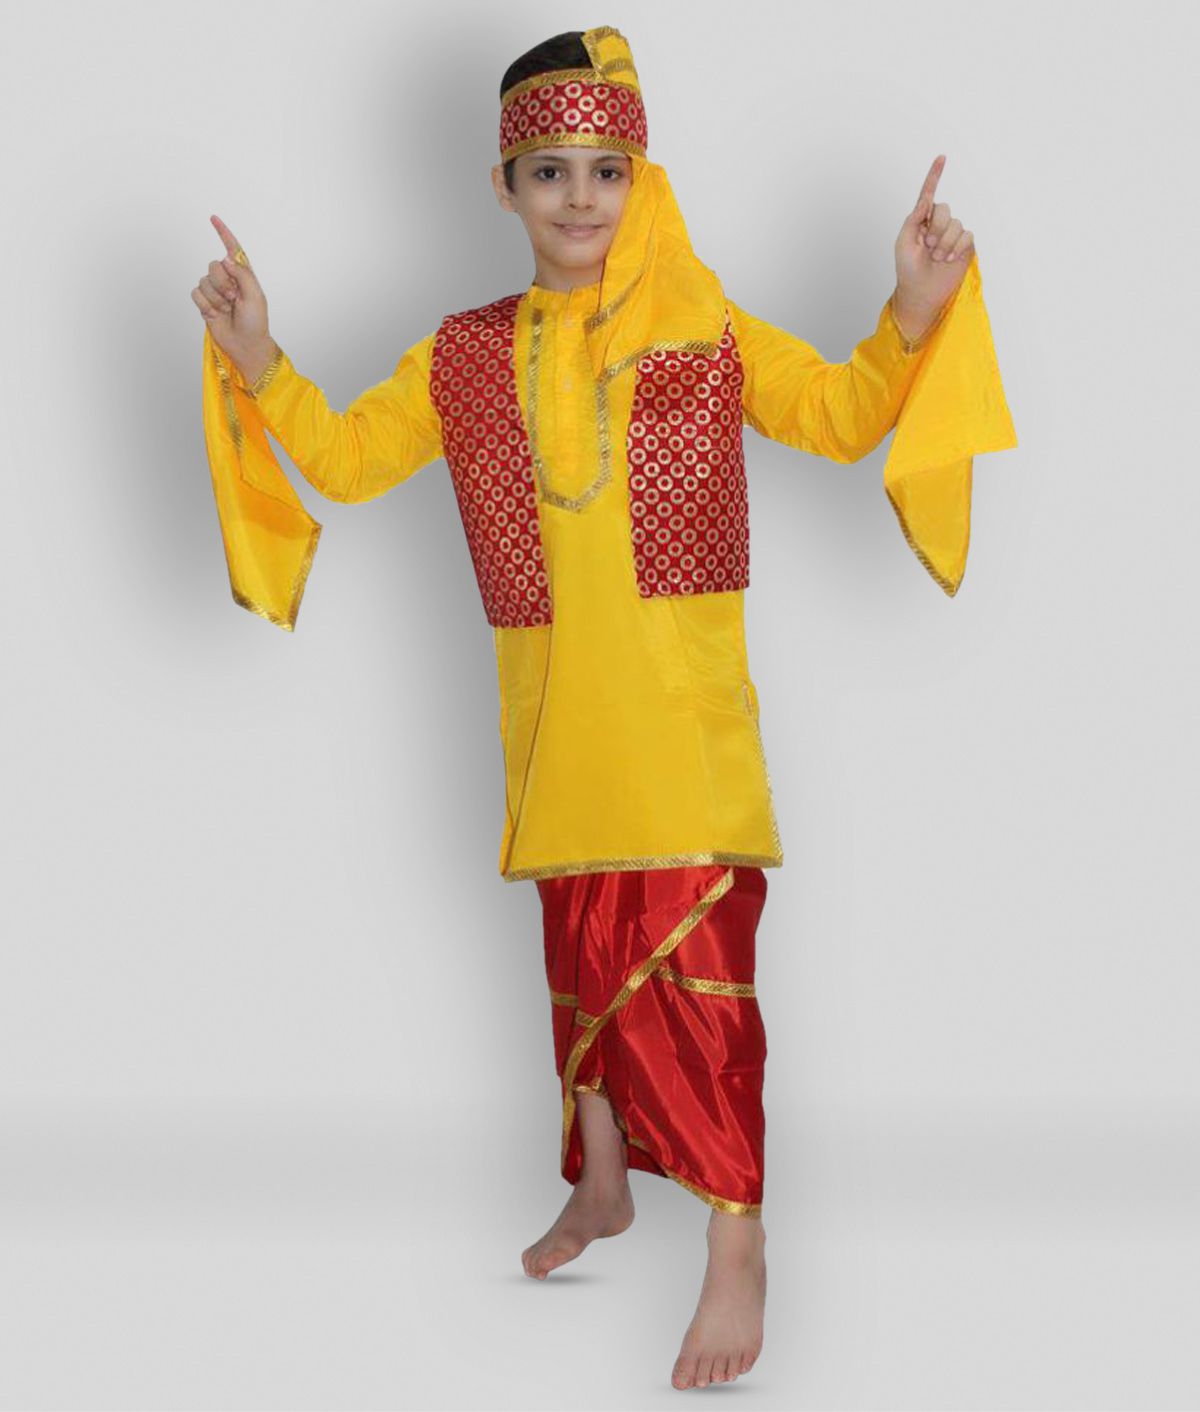     			Kaku Fancy Dresses Indian State Punjabi Folk Dance Costume for Kids/ Bhangda Gidda Dance Costume For Boys - Yellow & Red, 3-4 Years